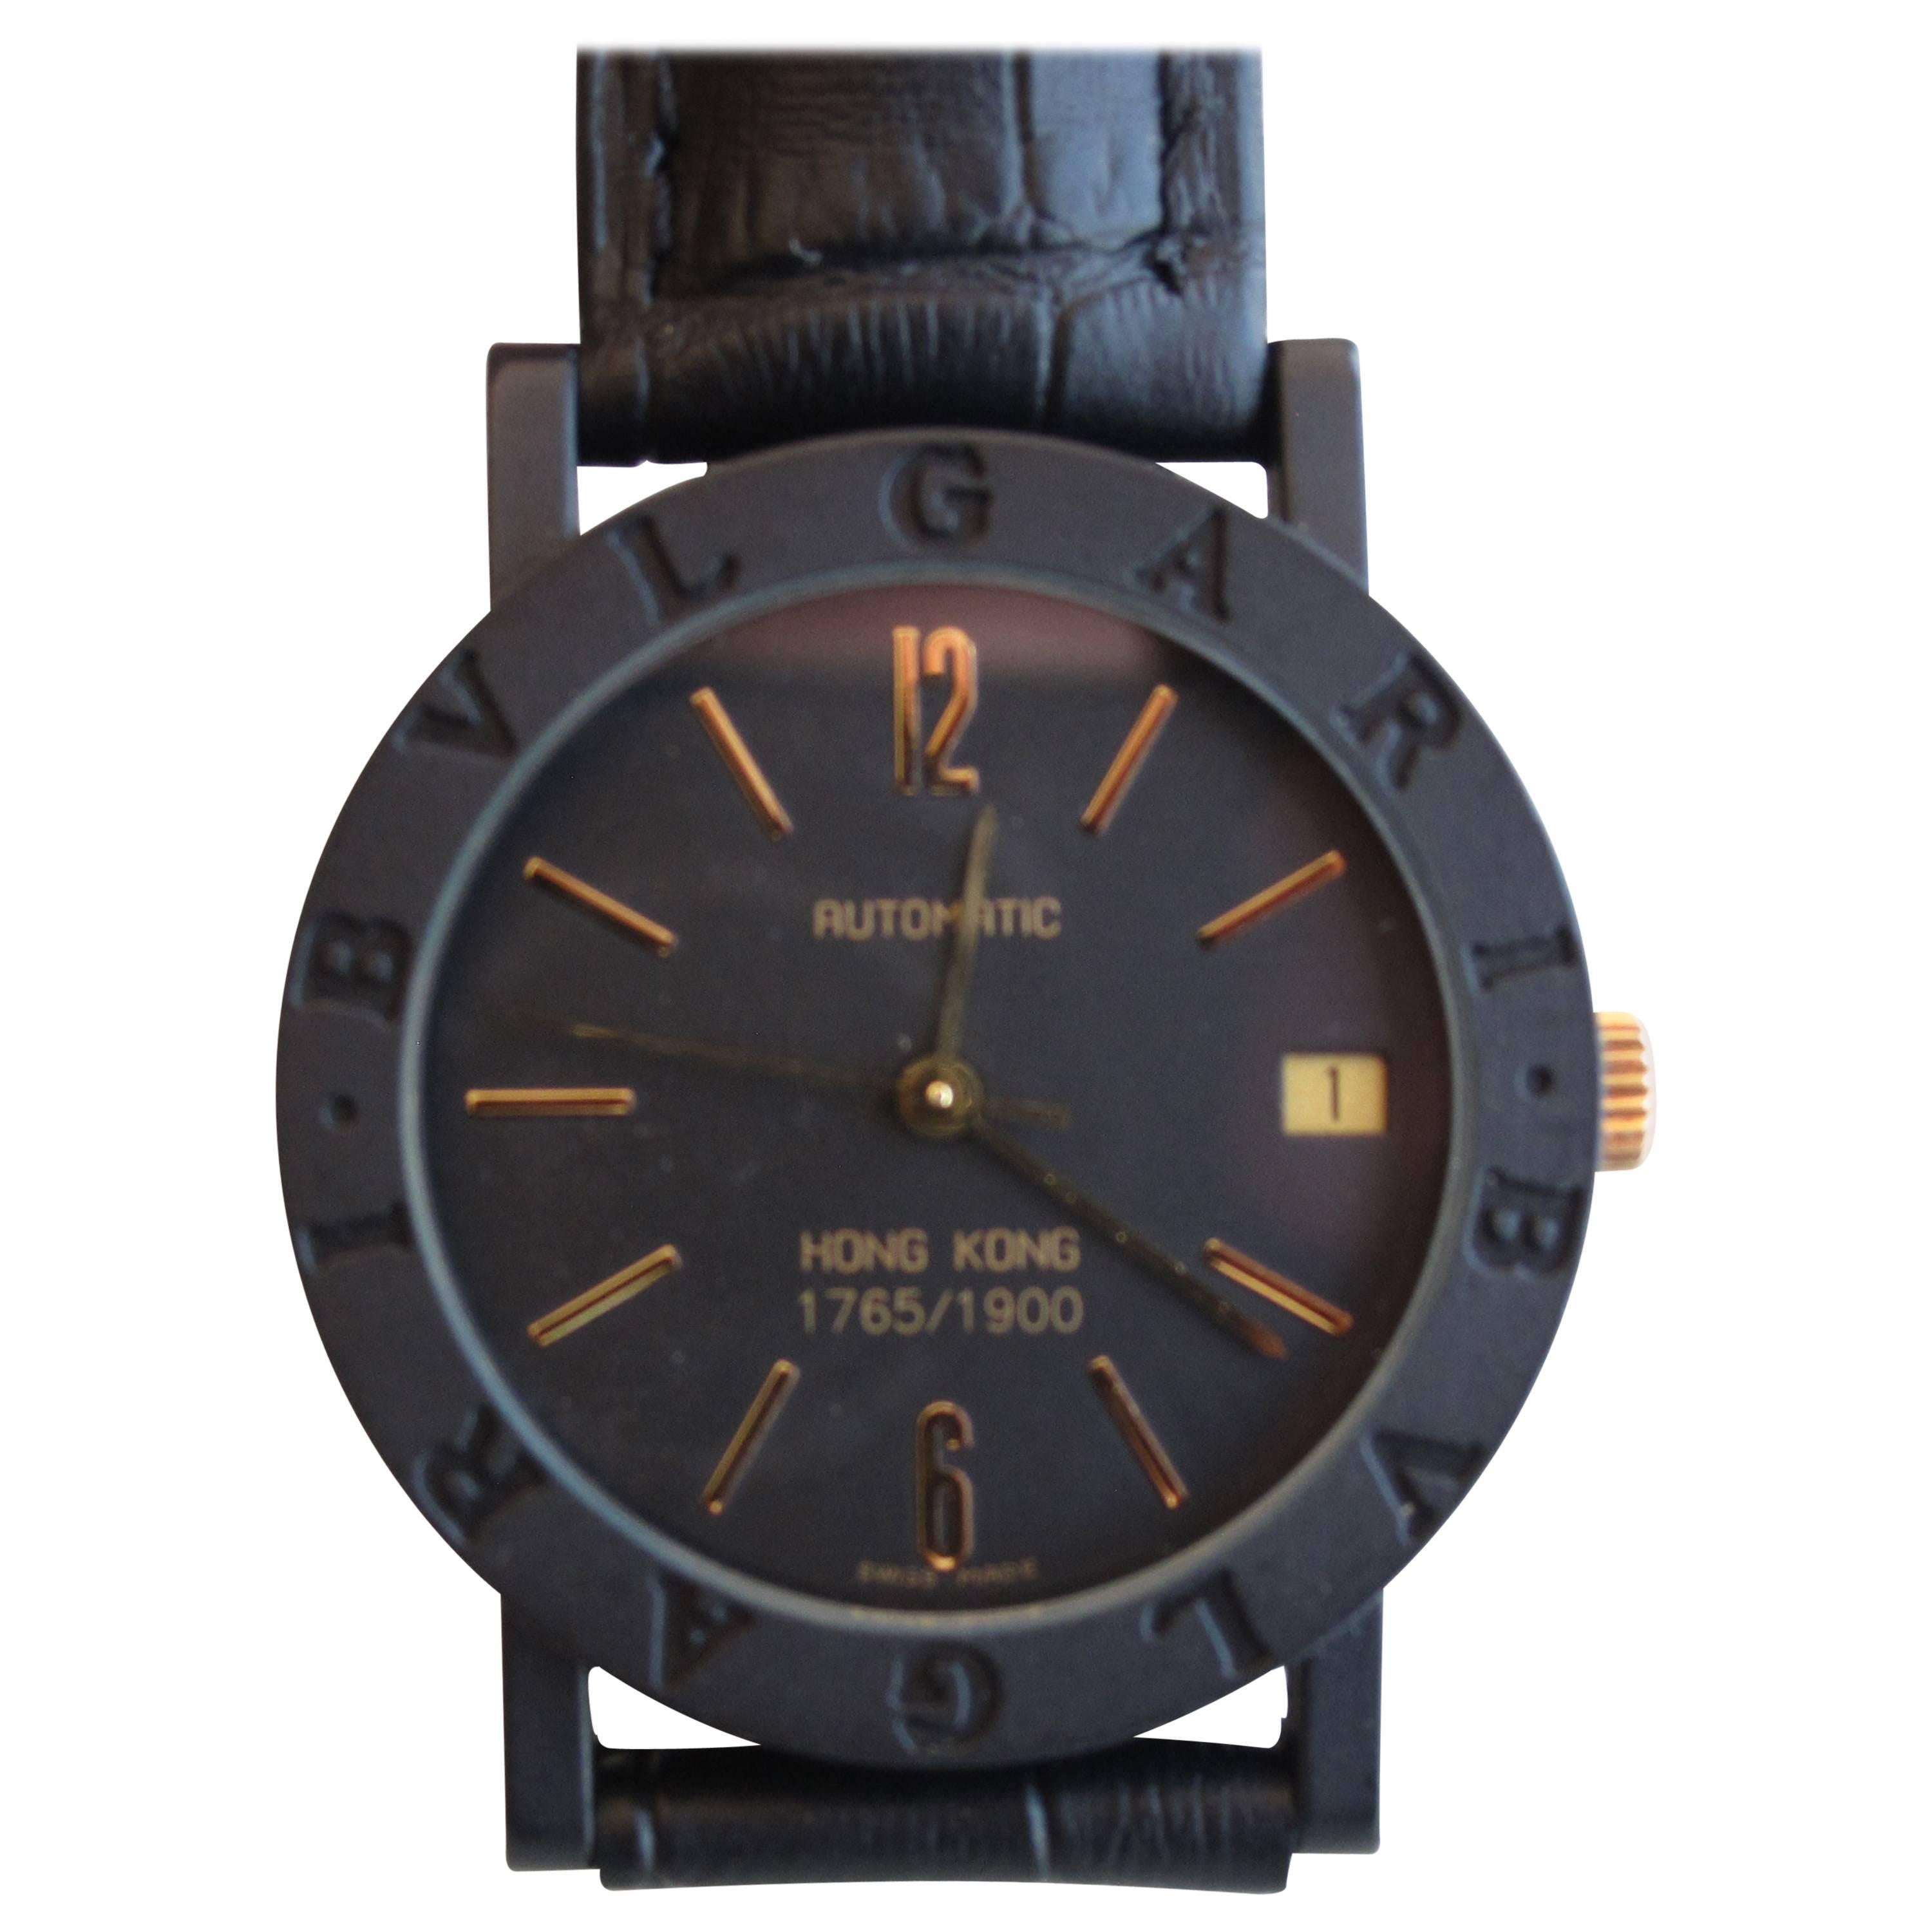 Bulgari CarbonGold Hong Kong Limited Edition Automatic Wristwatch